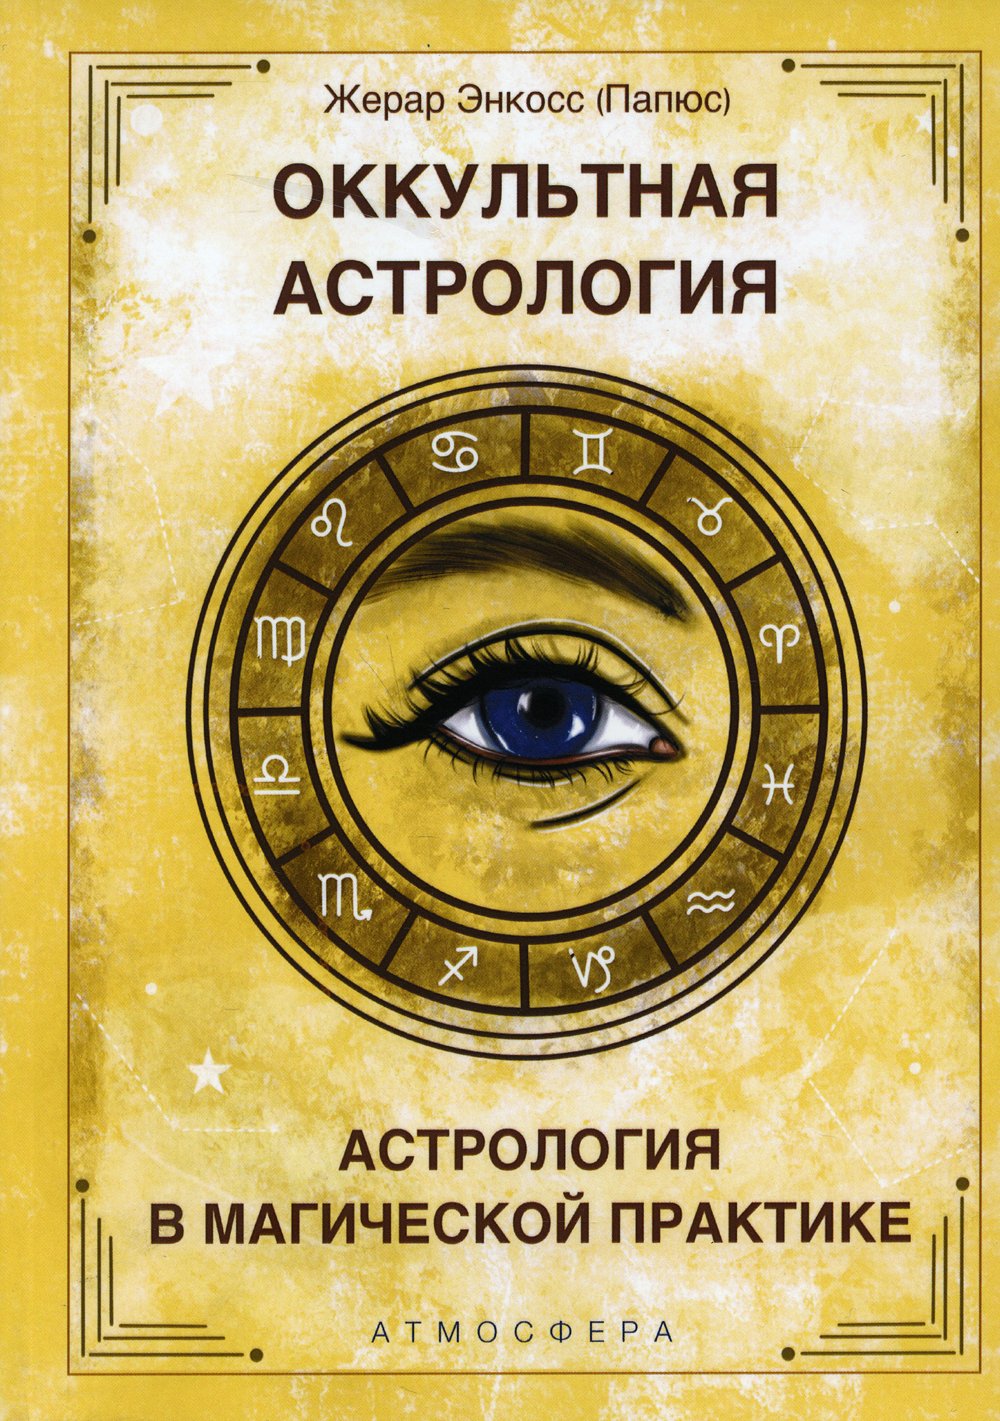 Папюс - Оккультная астрология. Астрология в магической практике